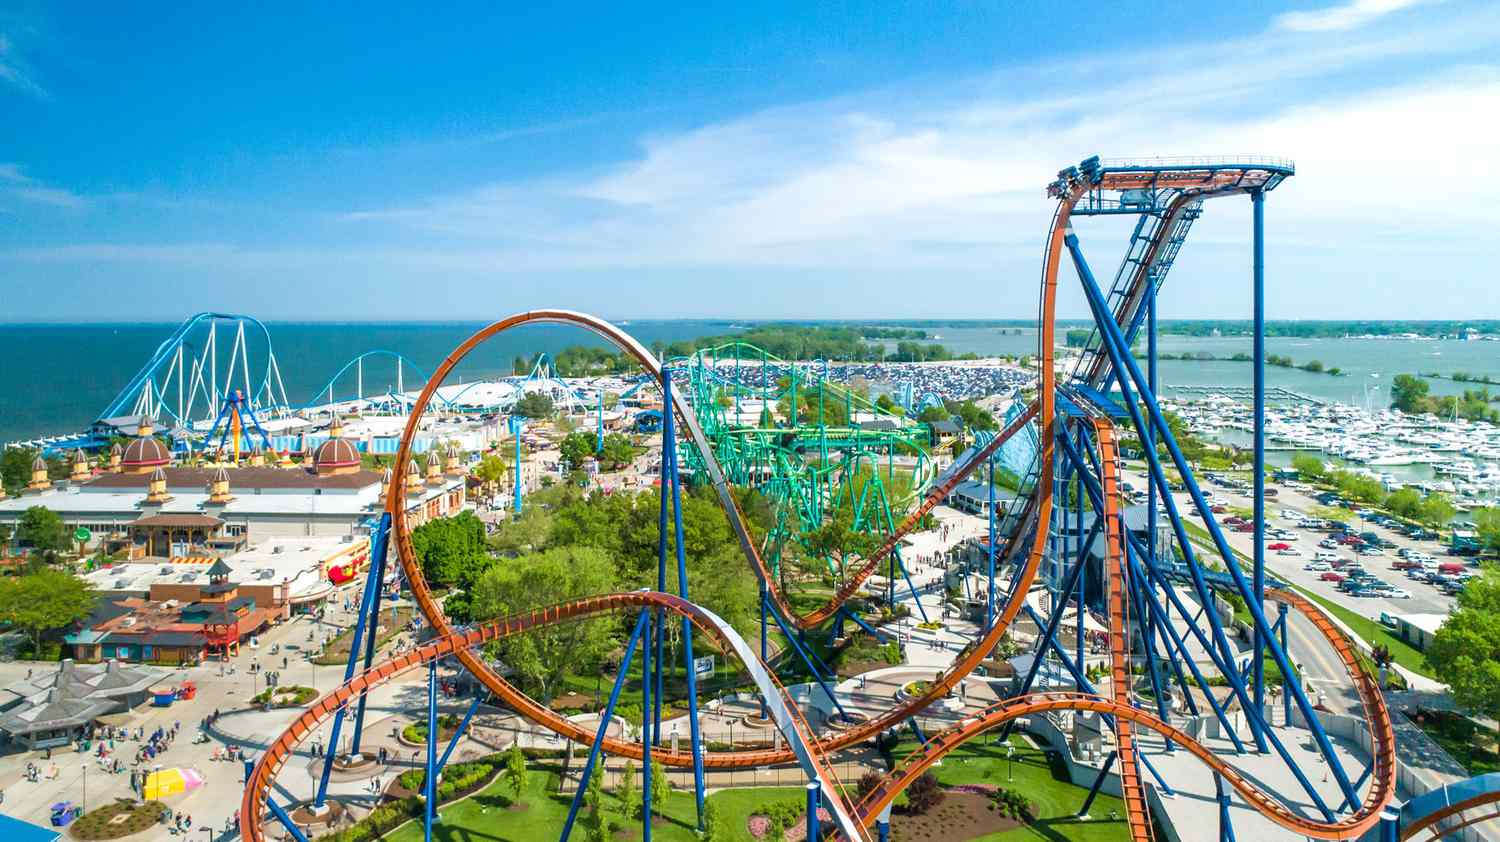 Cedar point amusement park aerial image